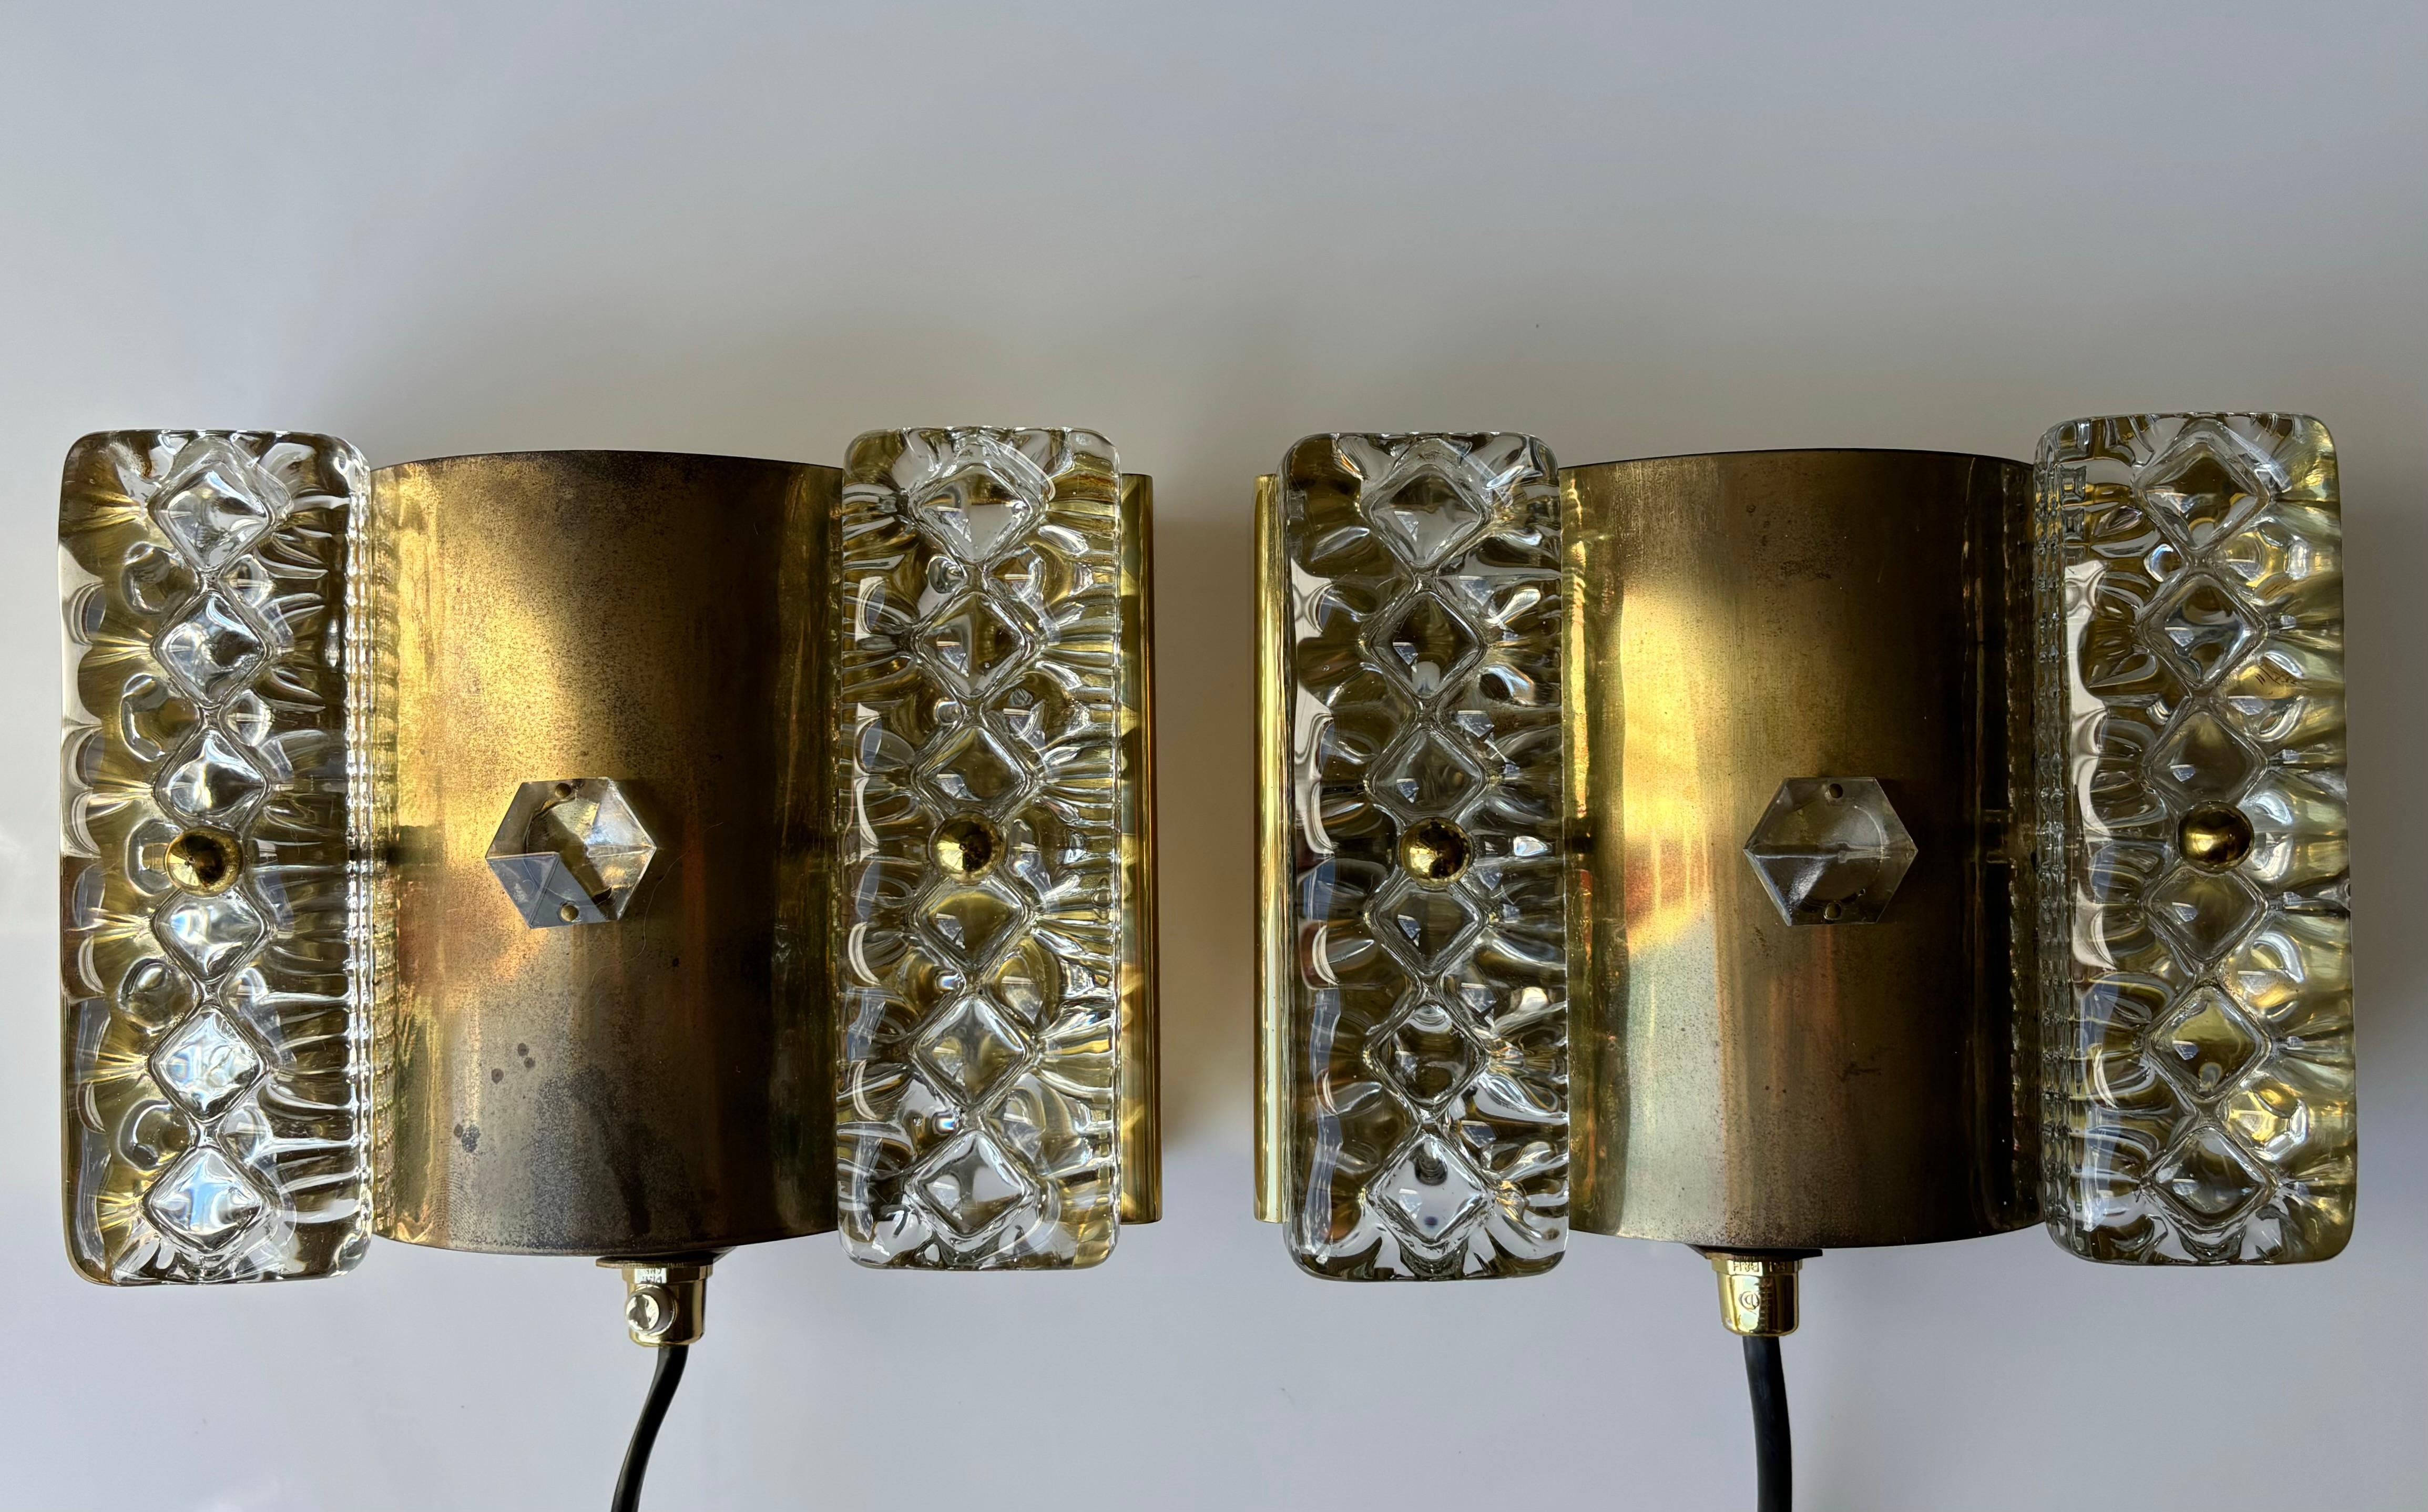 Vitrika Danish Modern Brass Glass Wall Lights, 1960s For Sale 6